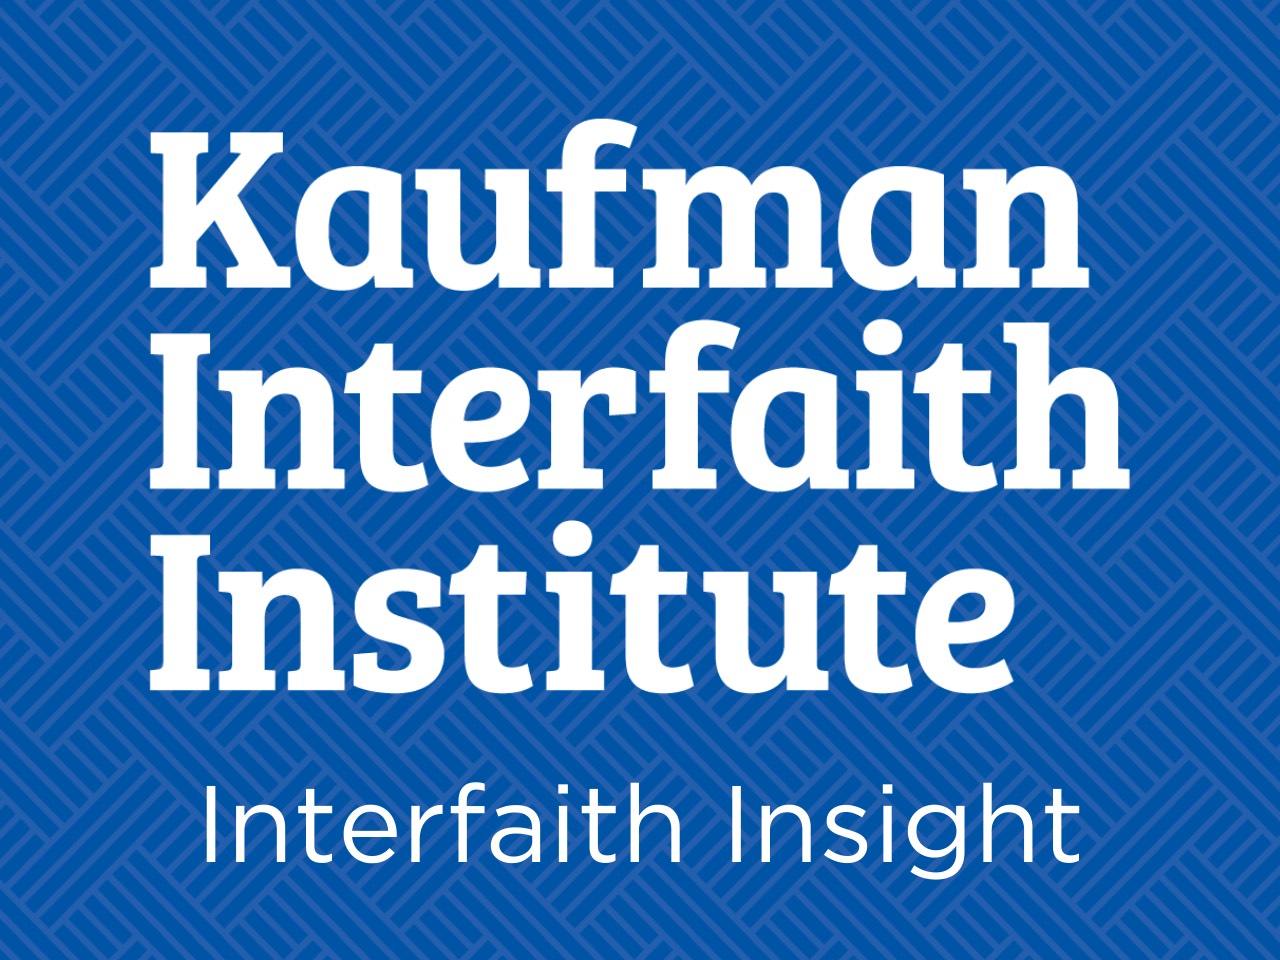 Kaufman Interfaith Institute Interfaith Insight in white over blue weave background